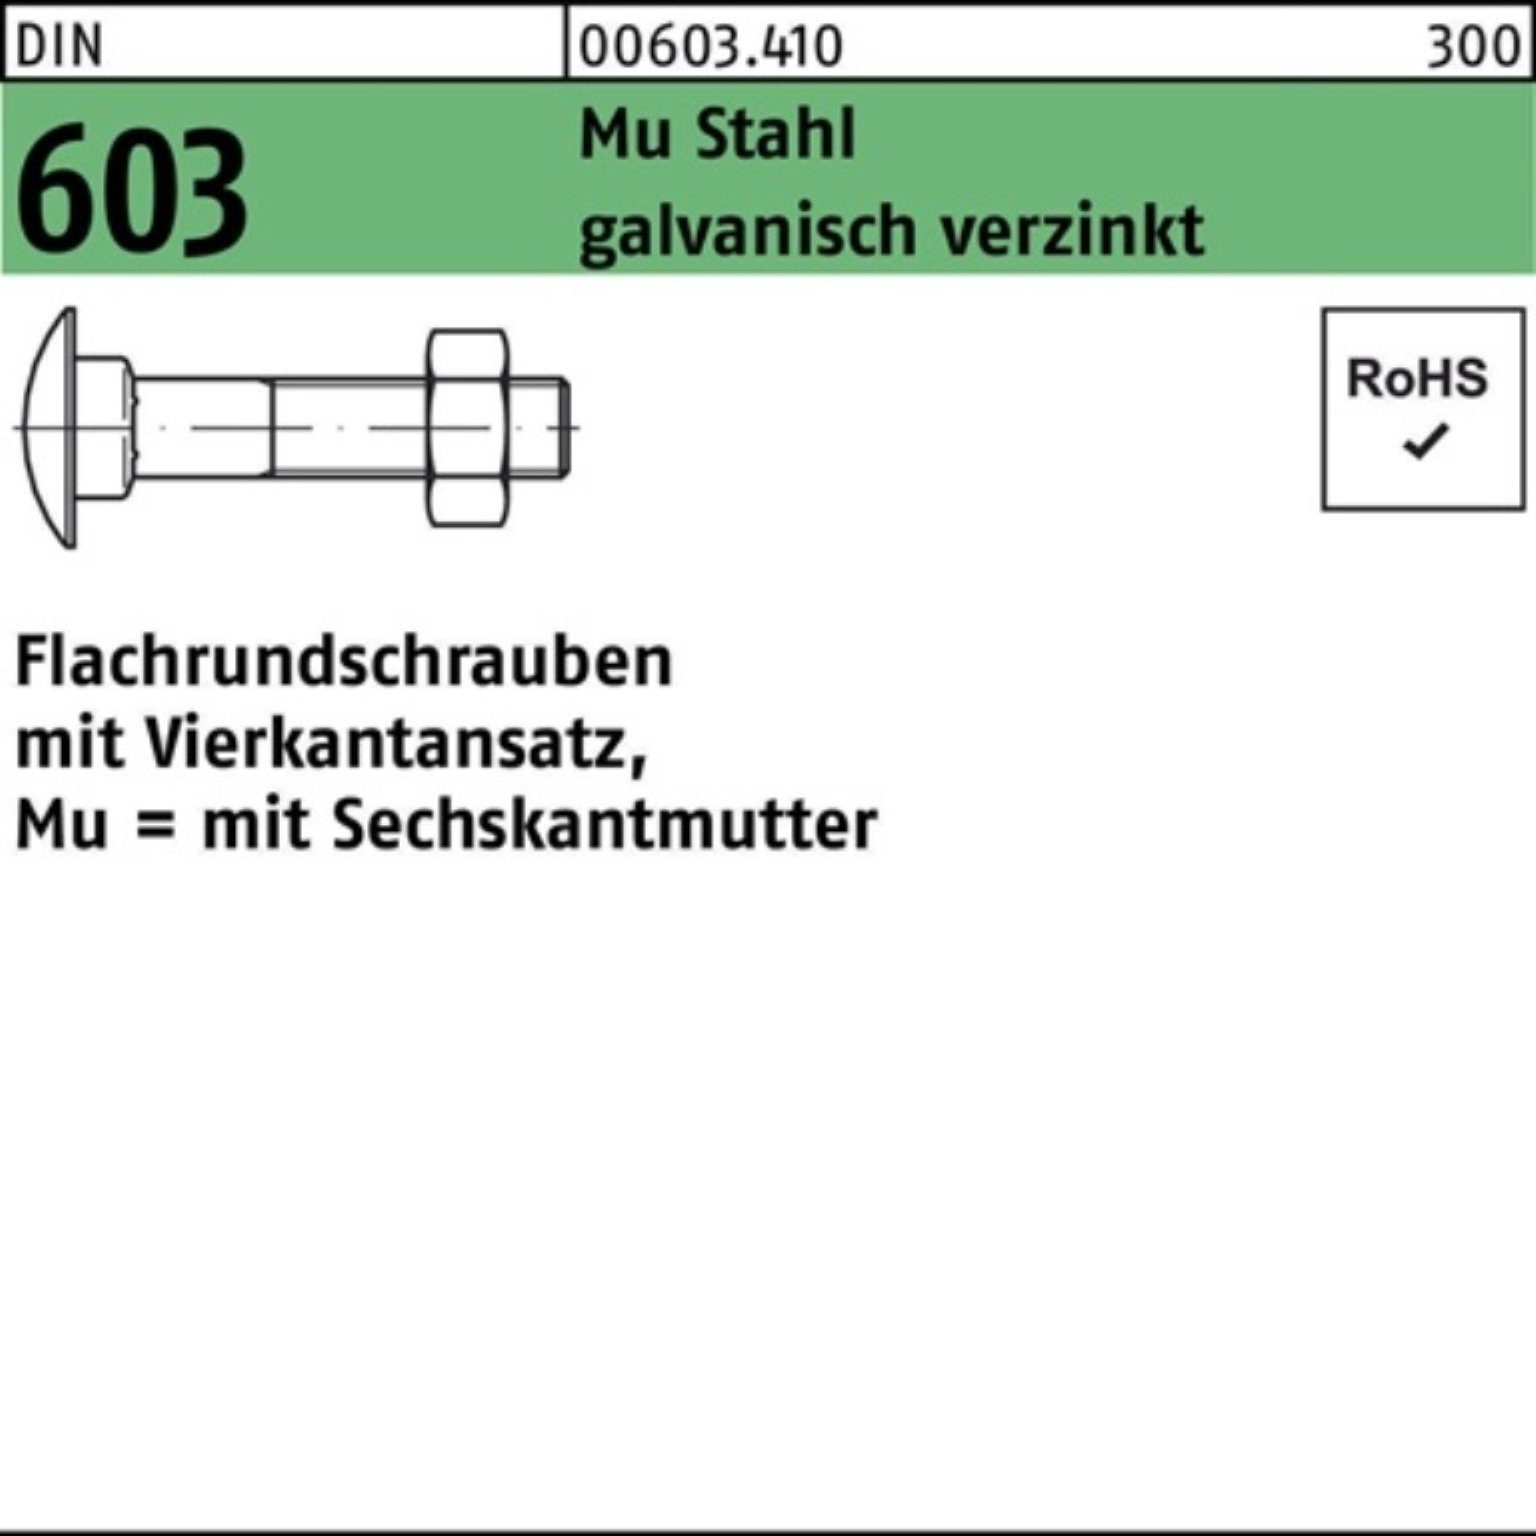 603 Reyher Vierkantansatz/6-ktmutter Schraube M10x40 DIN 100er Flachrundschraube Pack